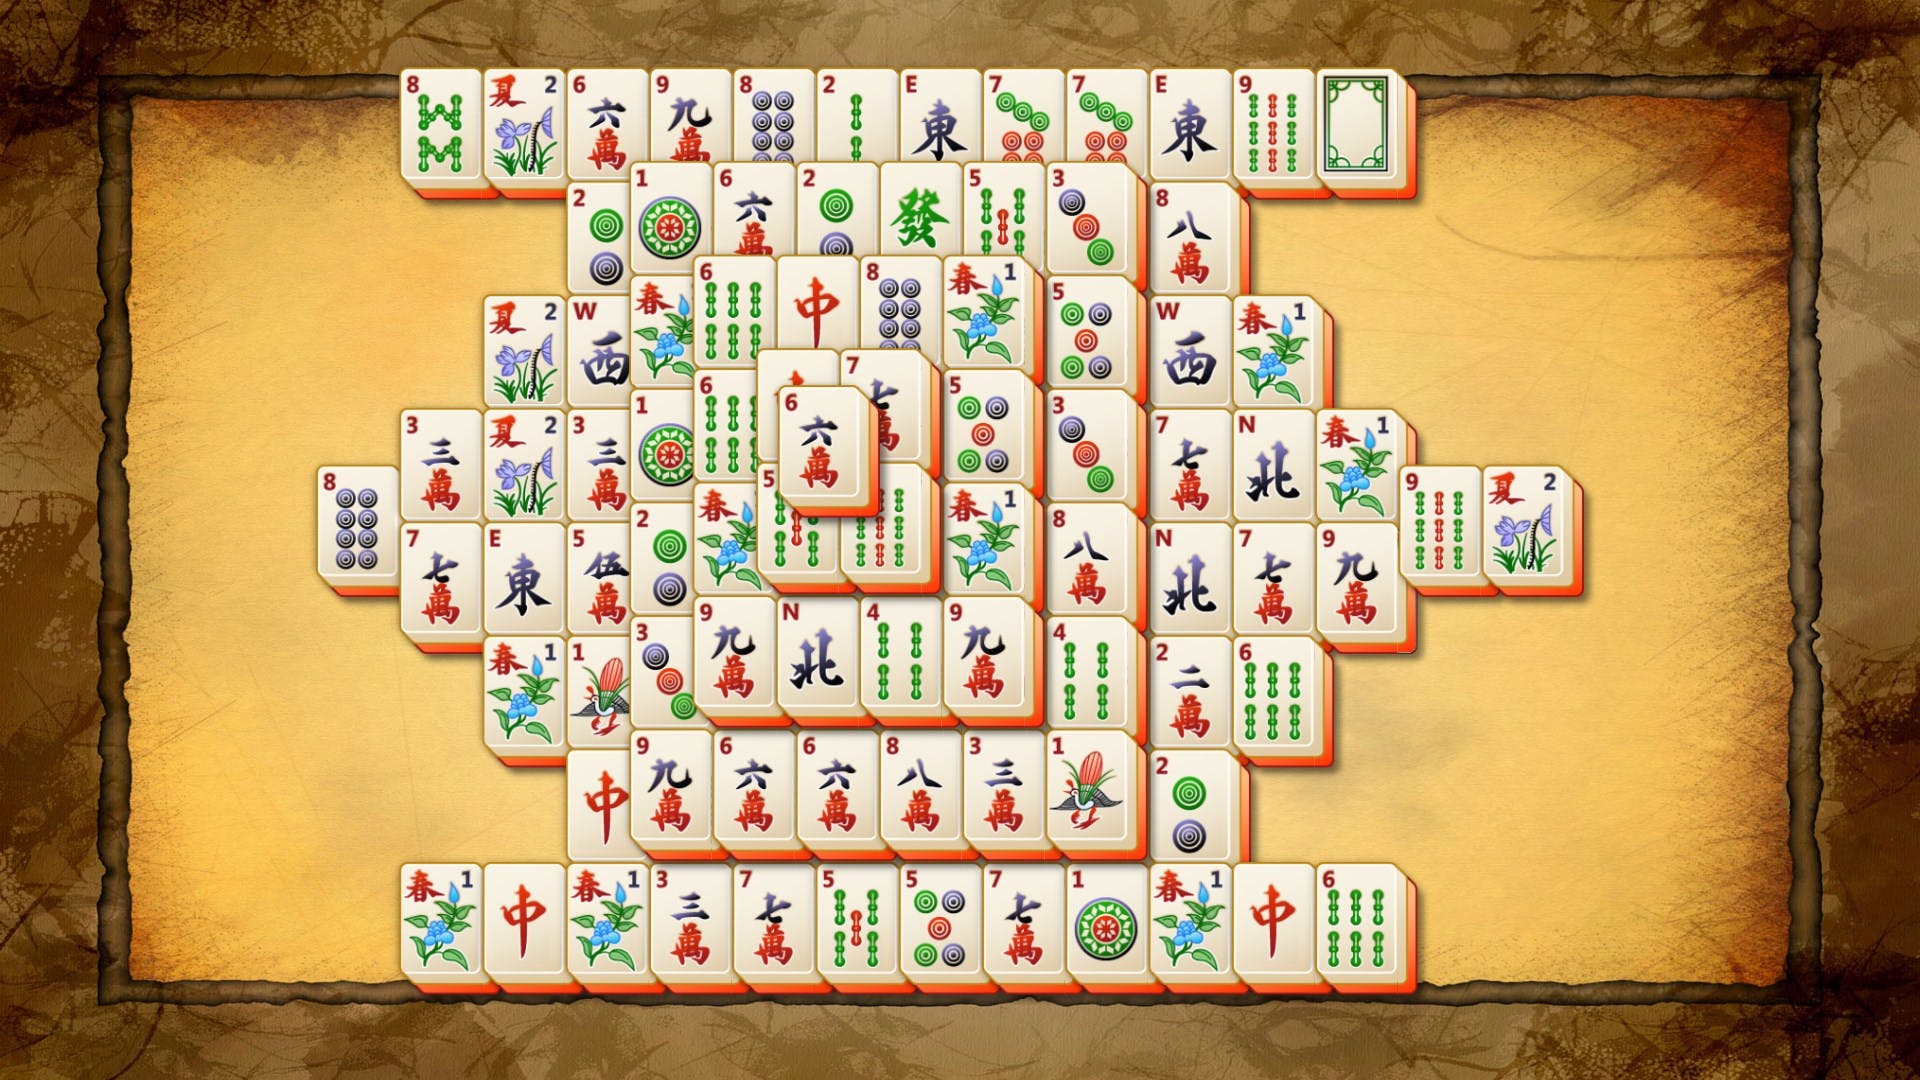 shanghai mahjong pc game download